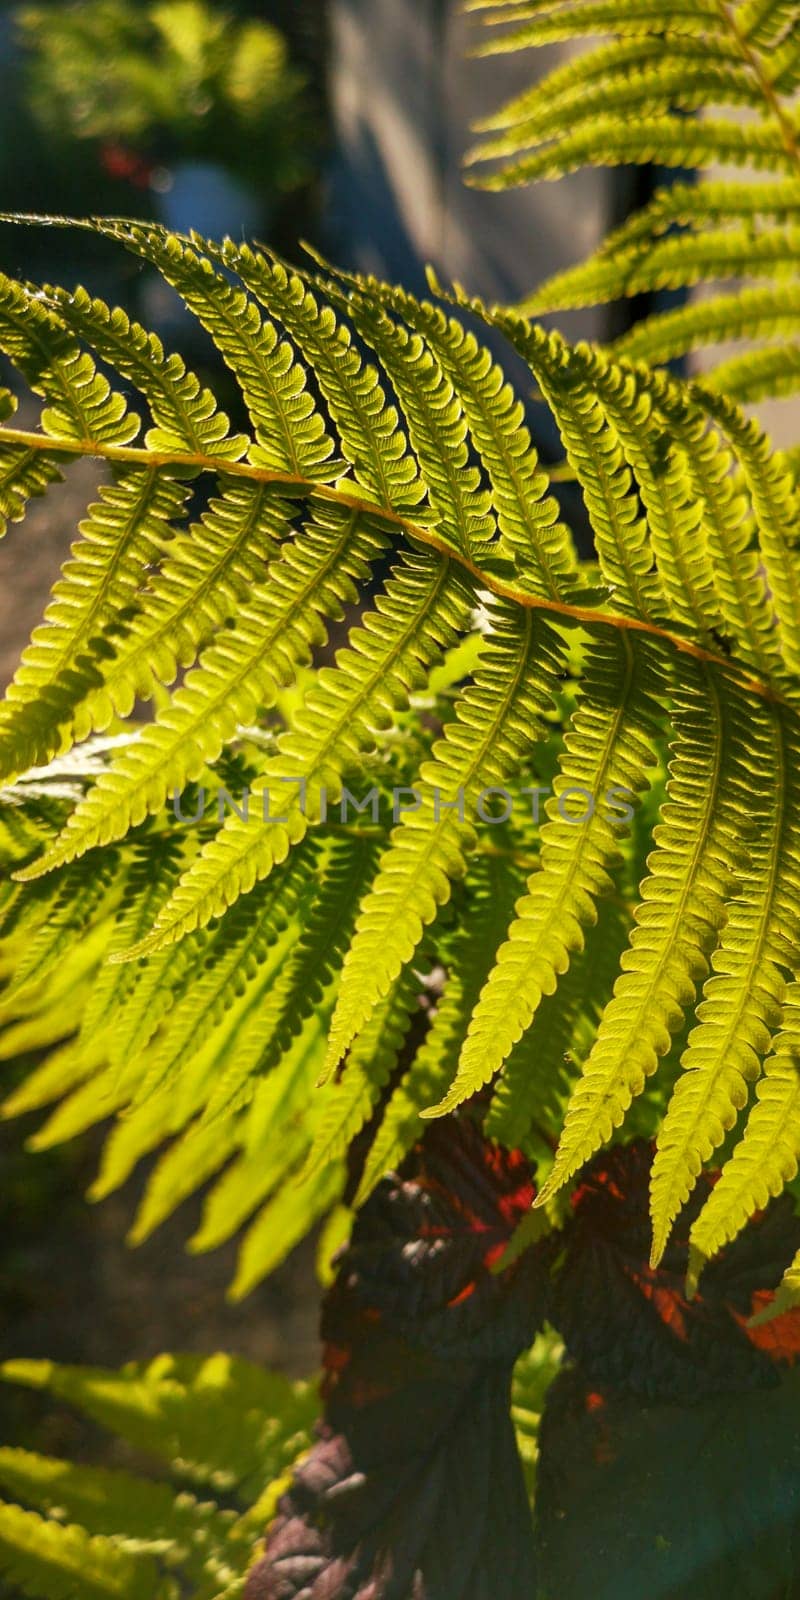 Wild natural green fern leaf in the backlight of the setting sun. Wild fern leaves, osmunda regalis, EAR TREES, OR PIICHES, tree fern branch Cyathea medullarisin front of sun